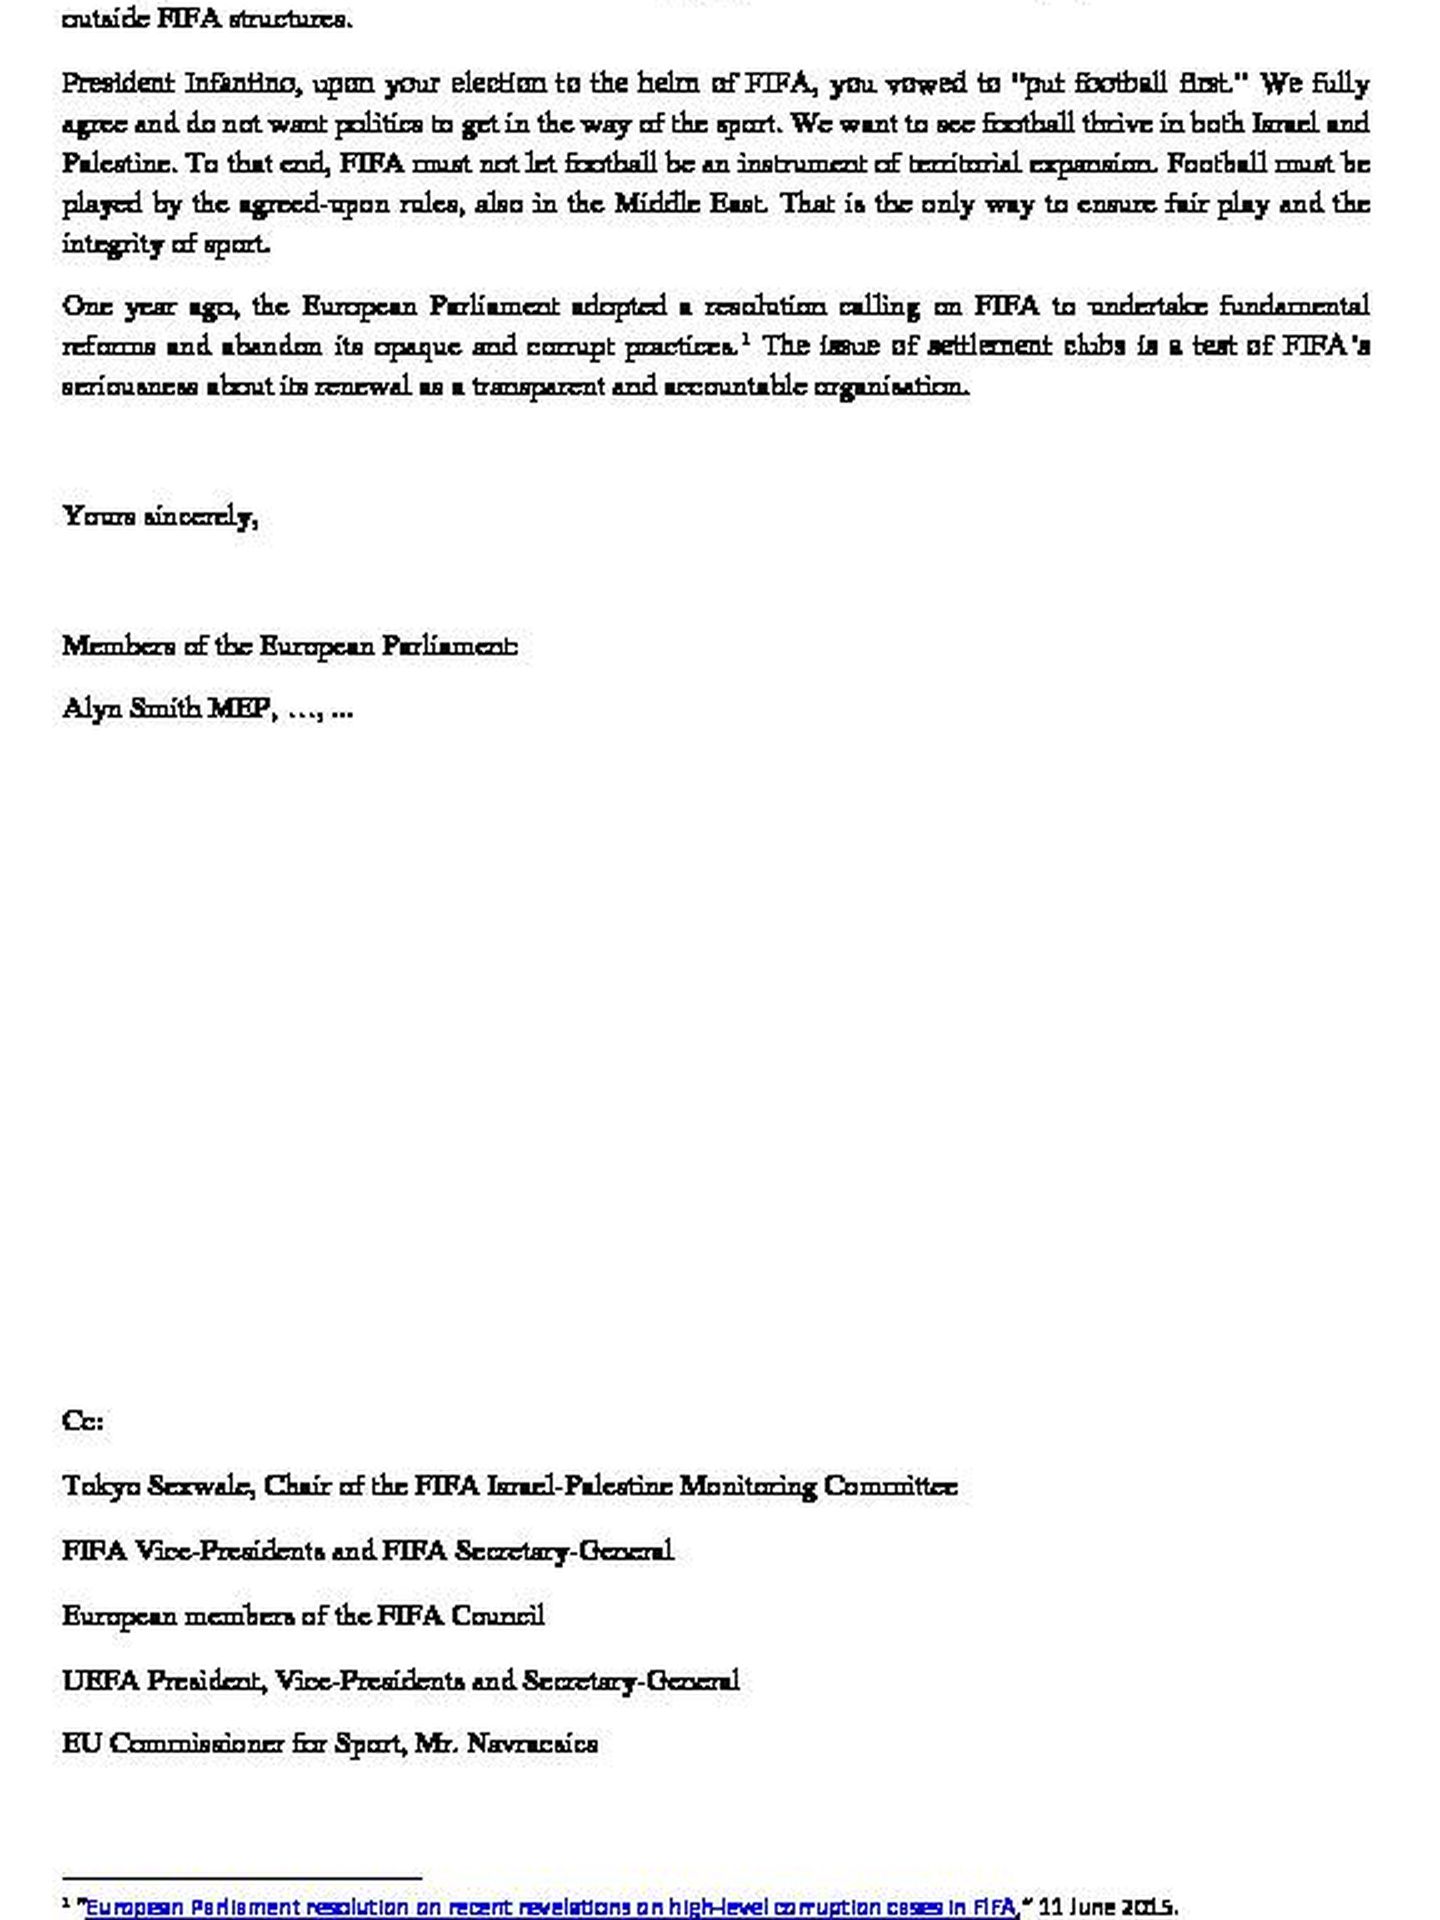 Lea la carta de los eurodiputados a Infantino.